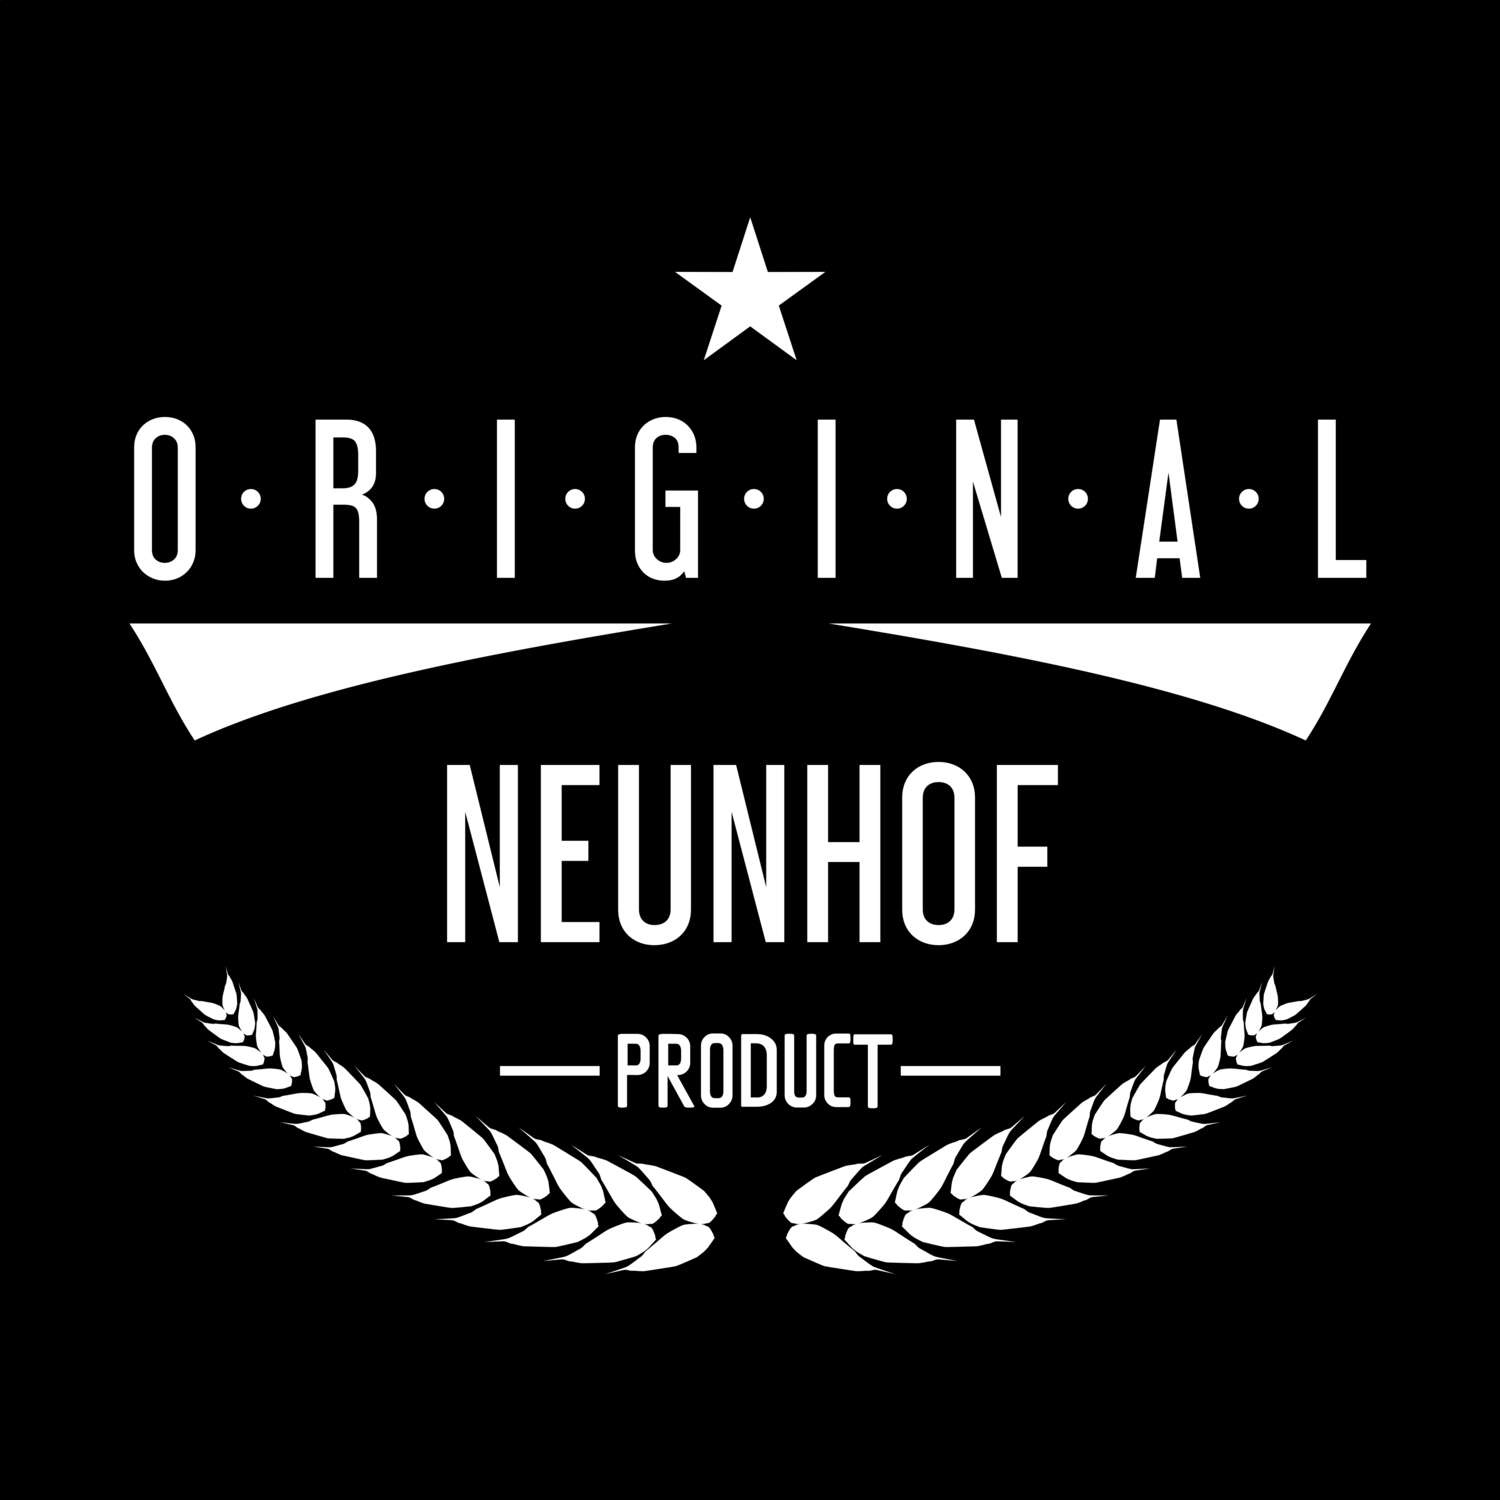 Neunhof T-Shirt »Original Product«